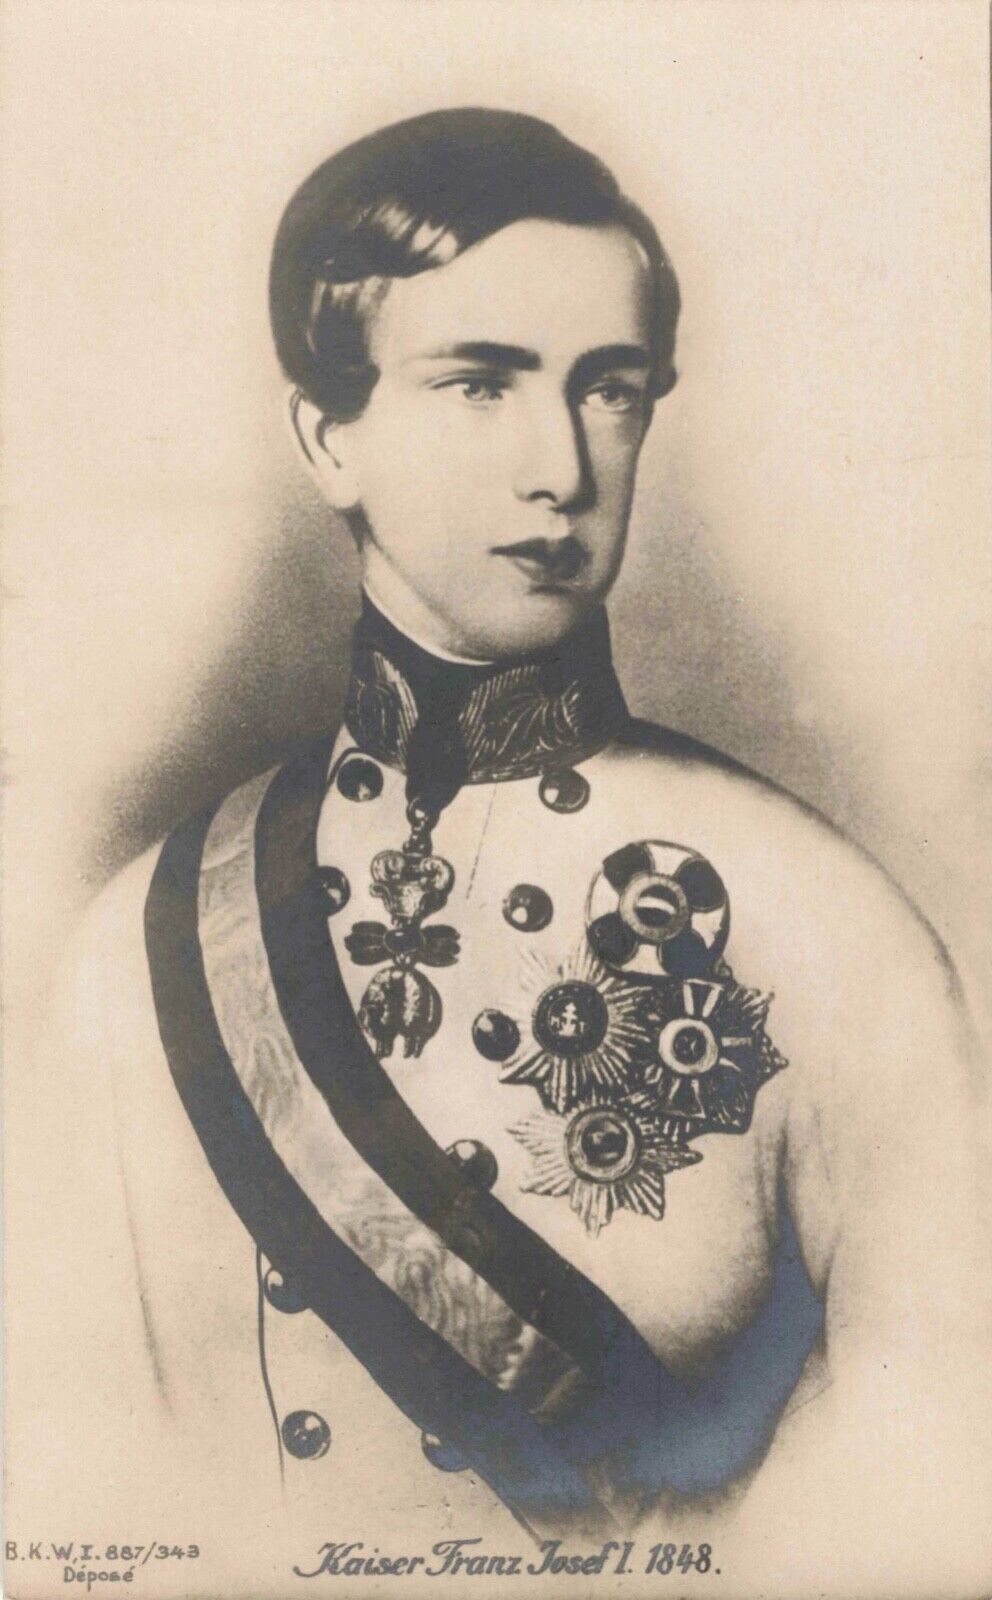 Austria Kaiser Franz Joseph I, 1848, BKWI 887/343 Vintage PC